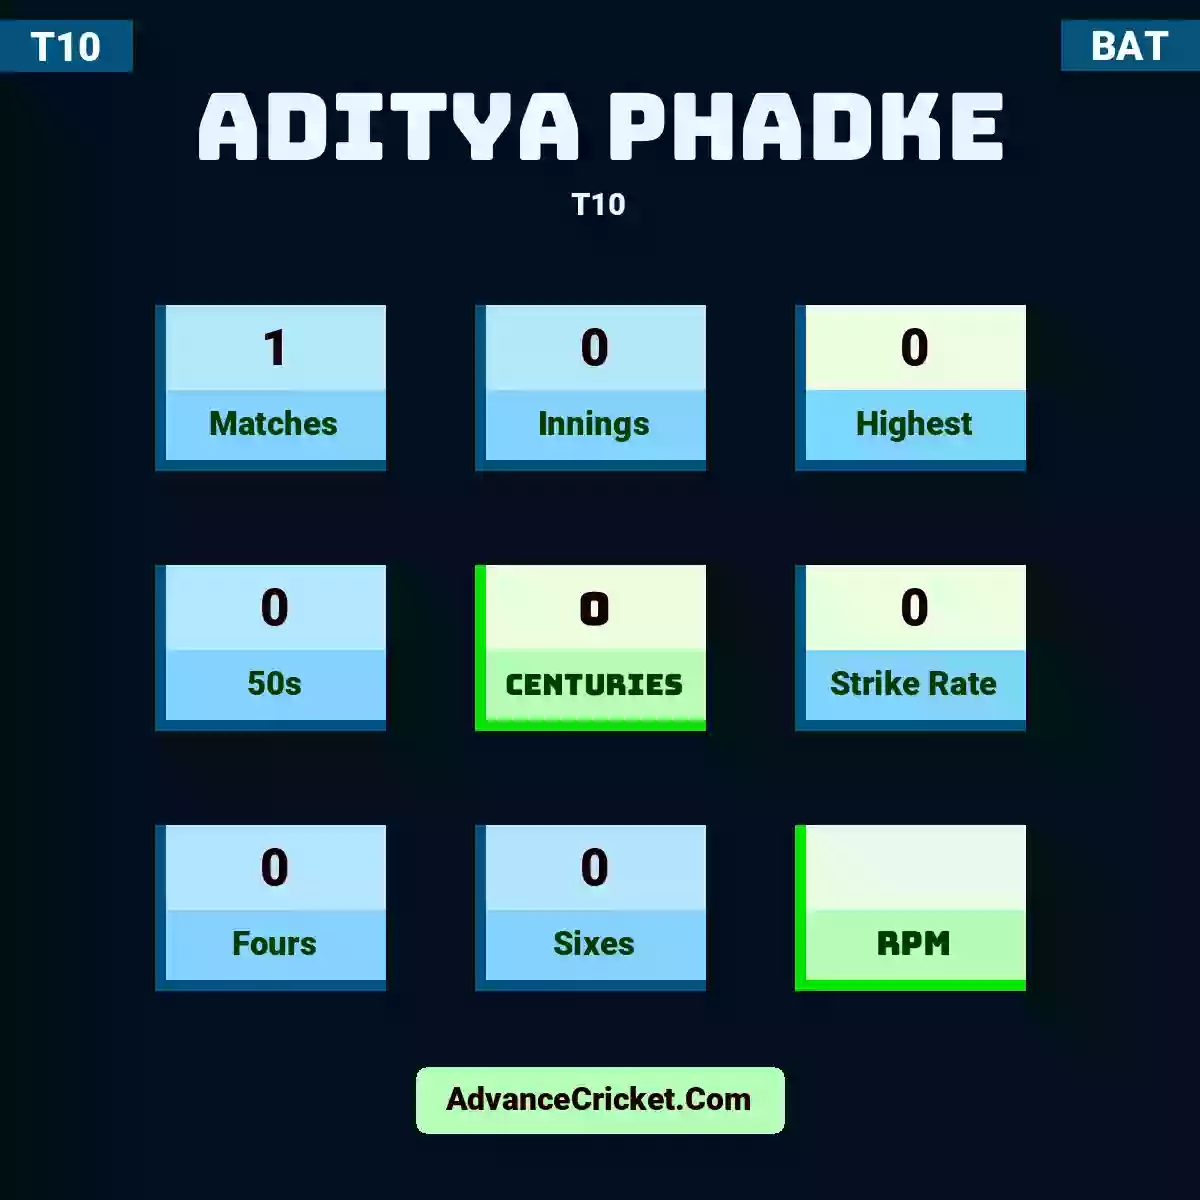 Aditya Phadke T10 , Aditya Phadke played 1 matches, scored 0 runs as highest, 0 half-centuries, and 0 centuries, with a strike rate of 0. A.Phadke hit 0 fours and 0 sixes.